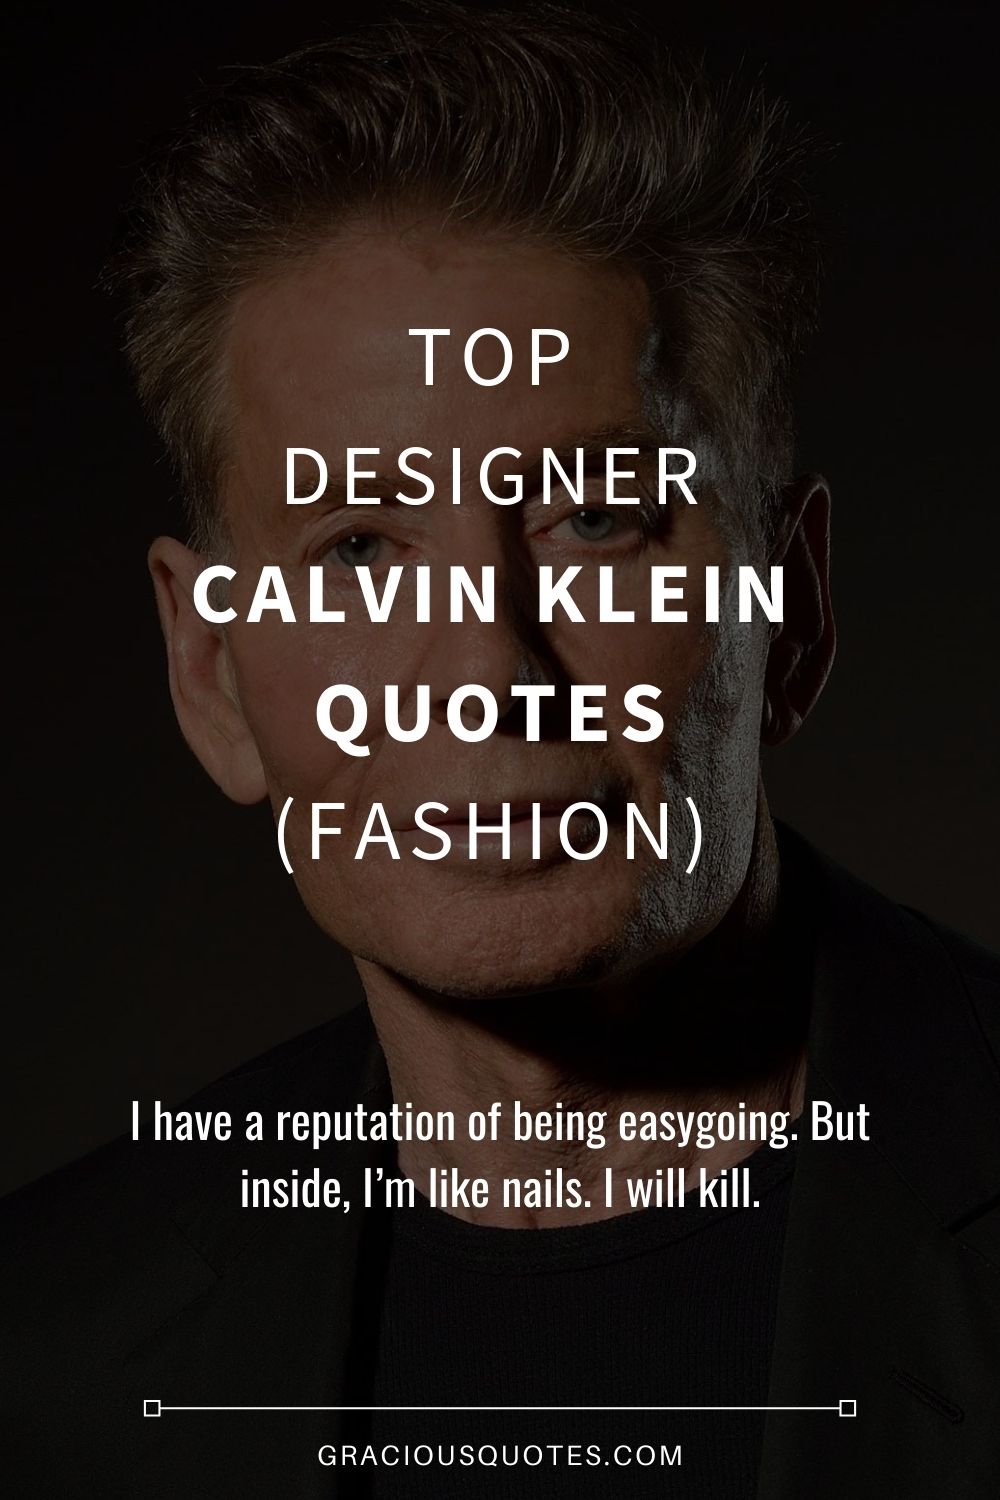 Top Designer Calvin Klein Quotes (FASHION) - Gracious Quotes